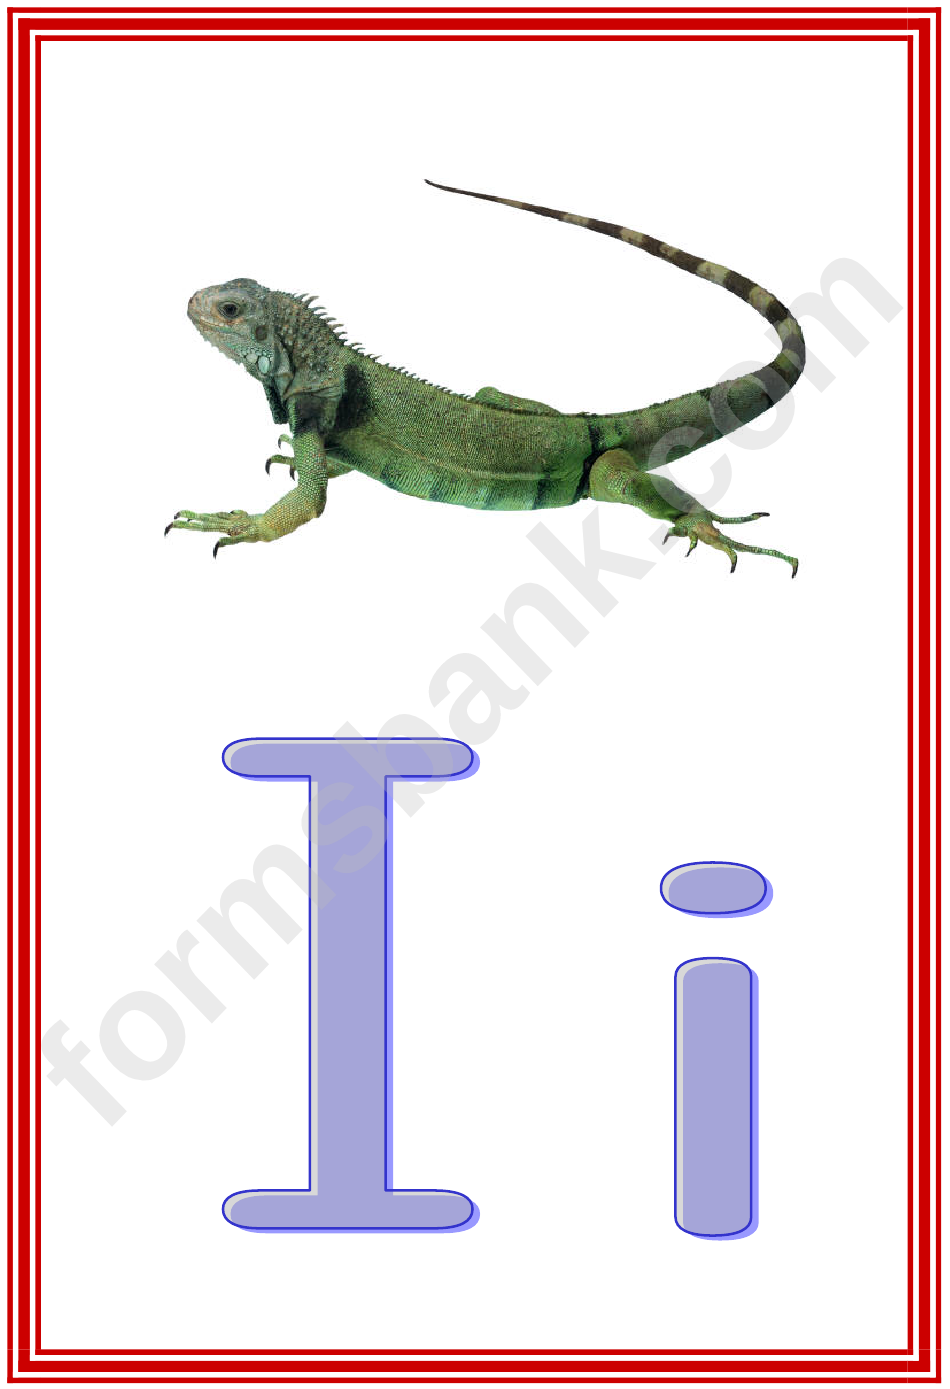 Photo Alphabet Frieze Card Template